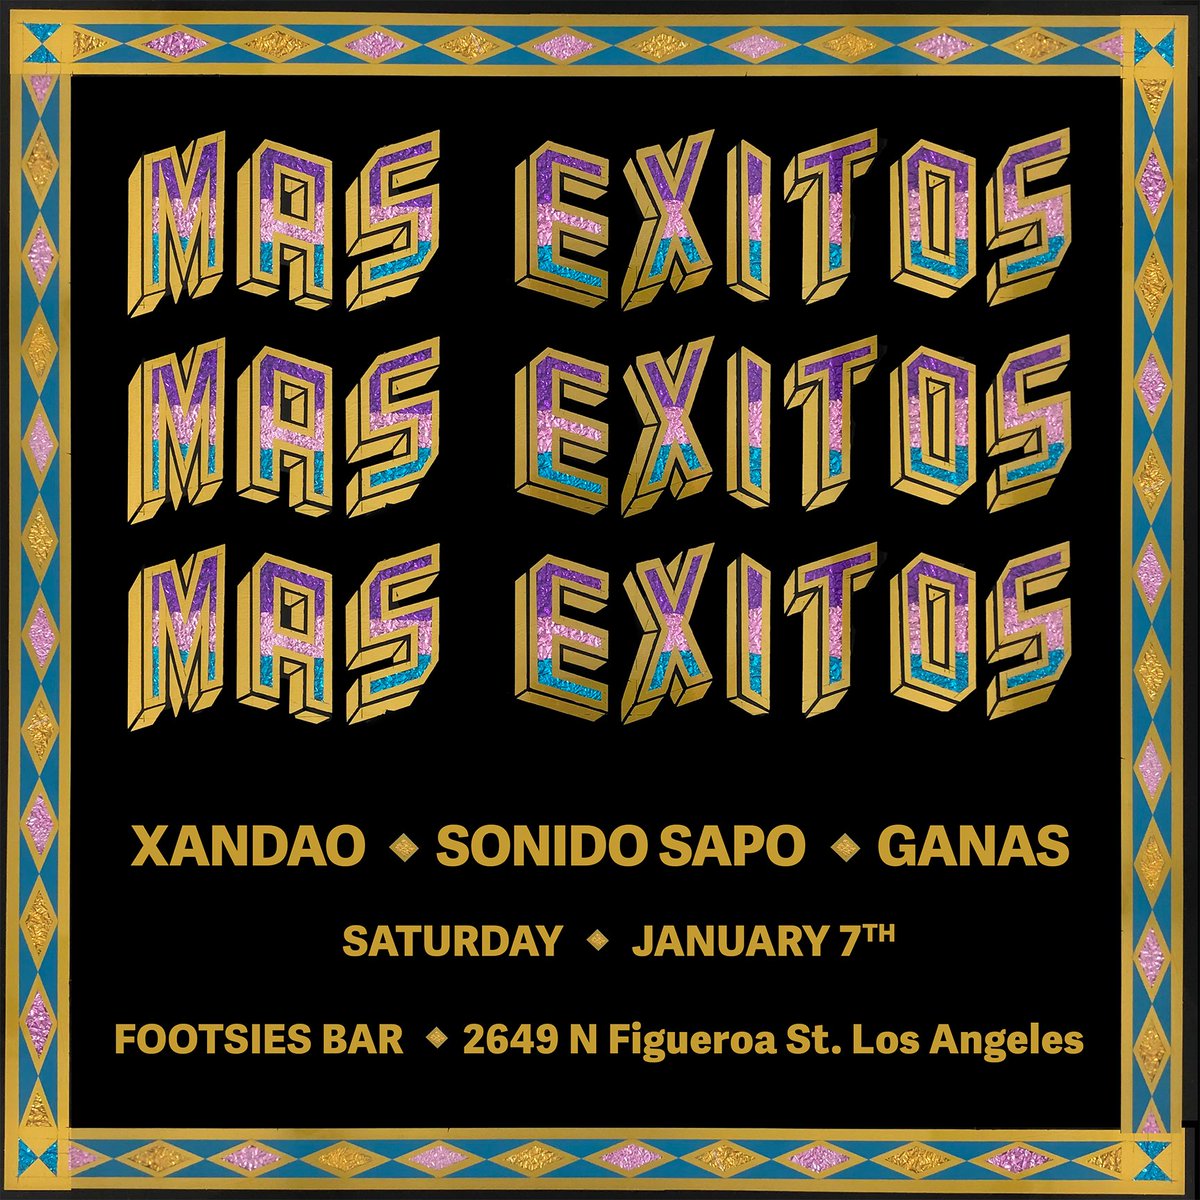 Más Éxitos is in full effect tonight with @xandao_sound @og_ganas @dogtoad aka Sonido Sapo. @footsiesbar Saturday January 7th 10-2 #eldiscoescultura @discos_rolas